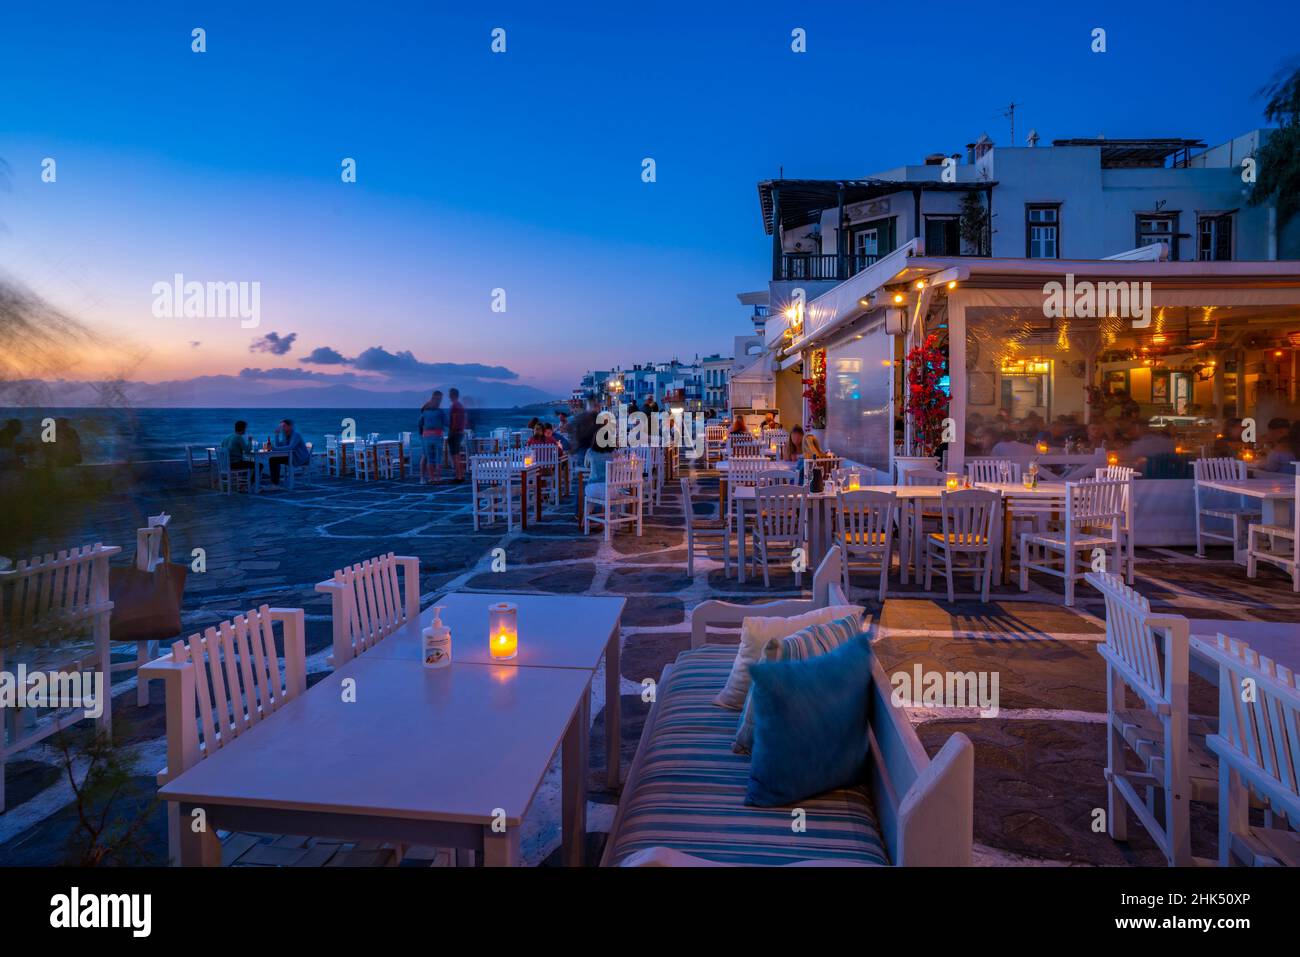 View of restaurants at Little Venice in Mykonos Town at night, Mykonos, Cyclades Islands, Greek Islands, Aegean Sea, Greece, Europe Stock Photo